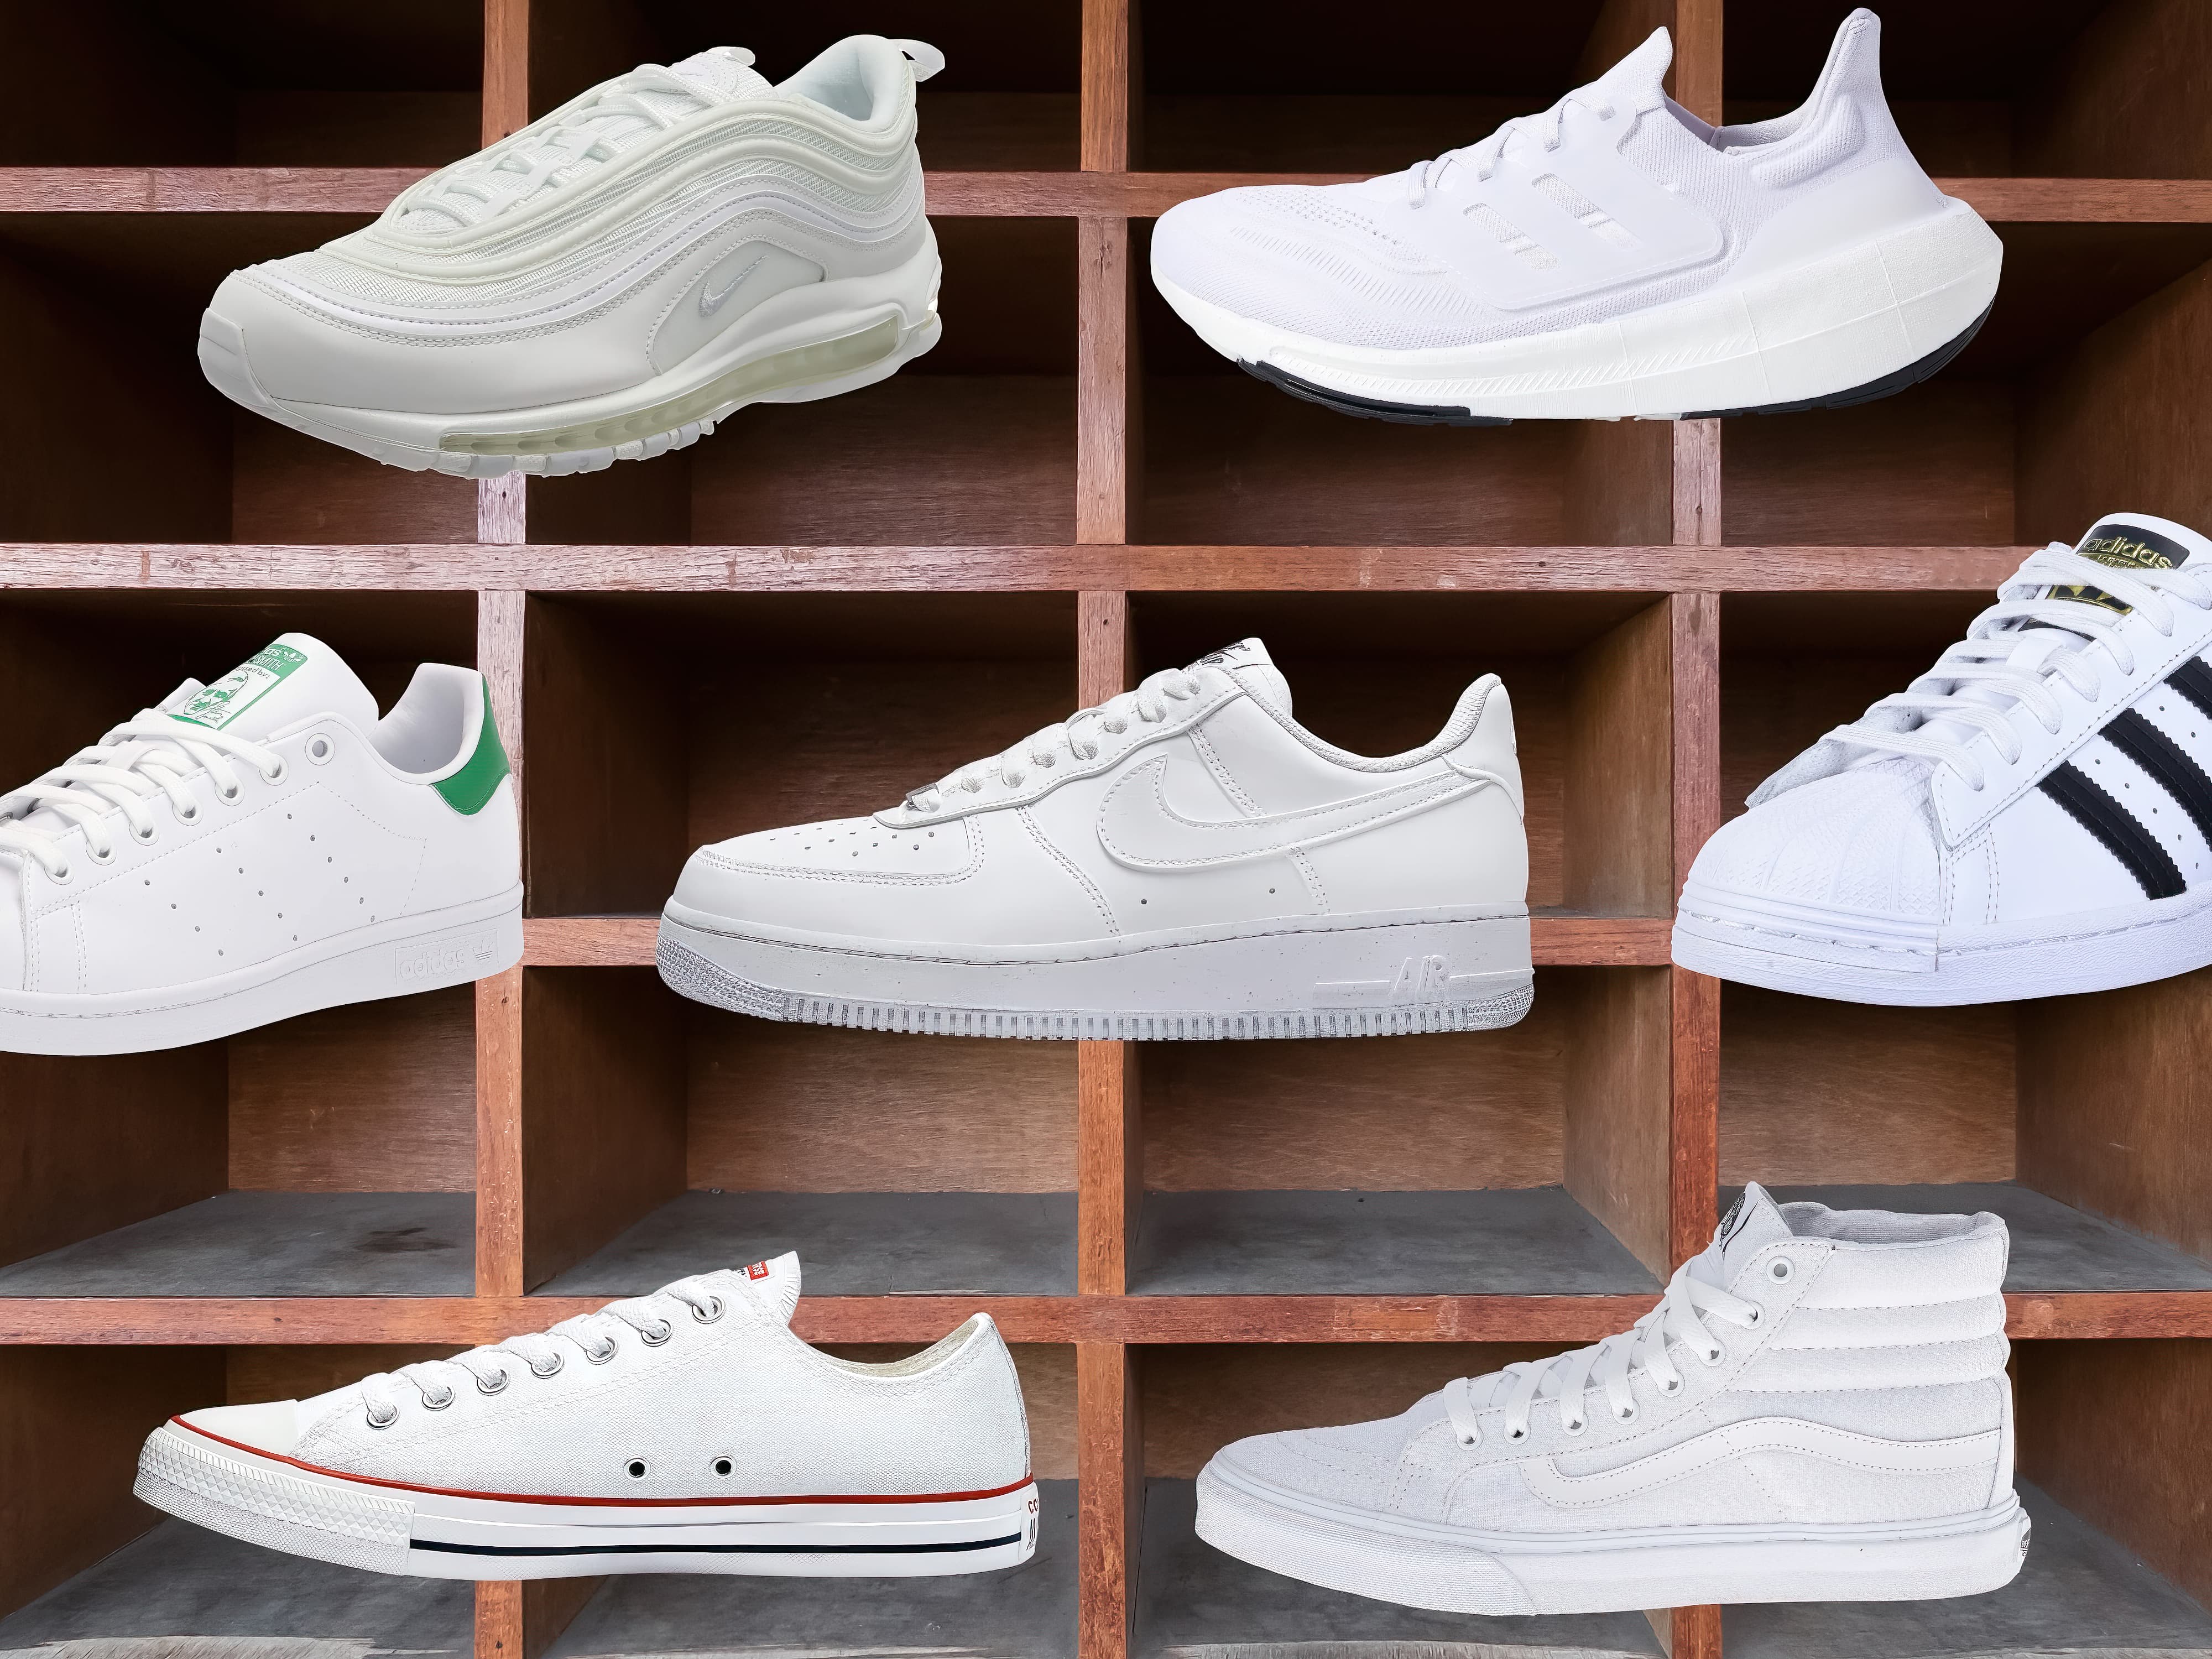 A shelf of women's white sneakers